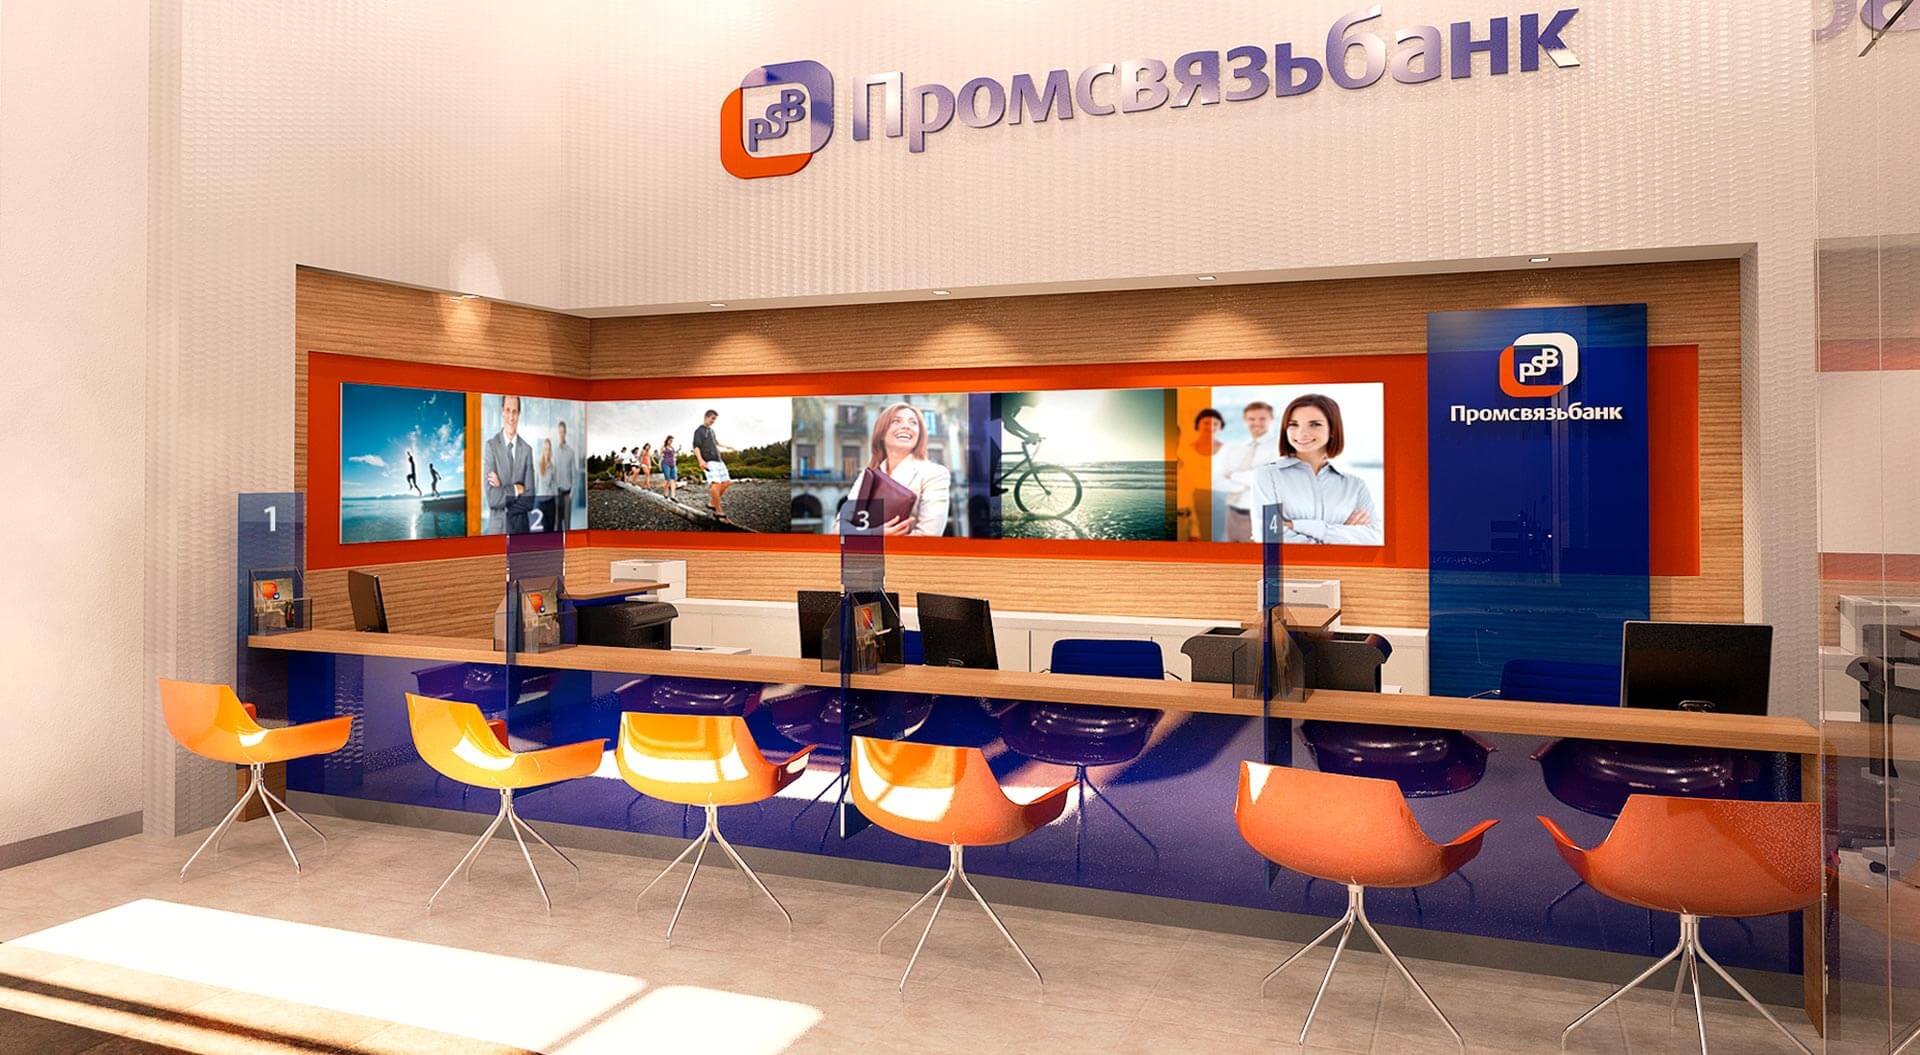 Promsvyazbank visual of customer teller stations banking hall design and branding